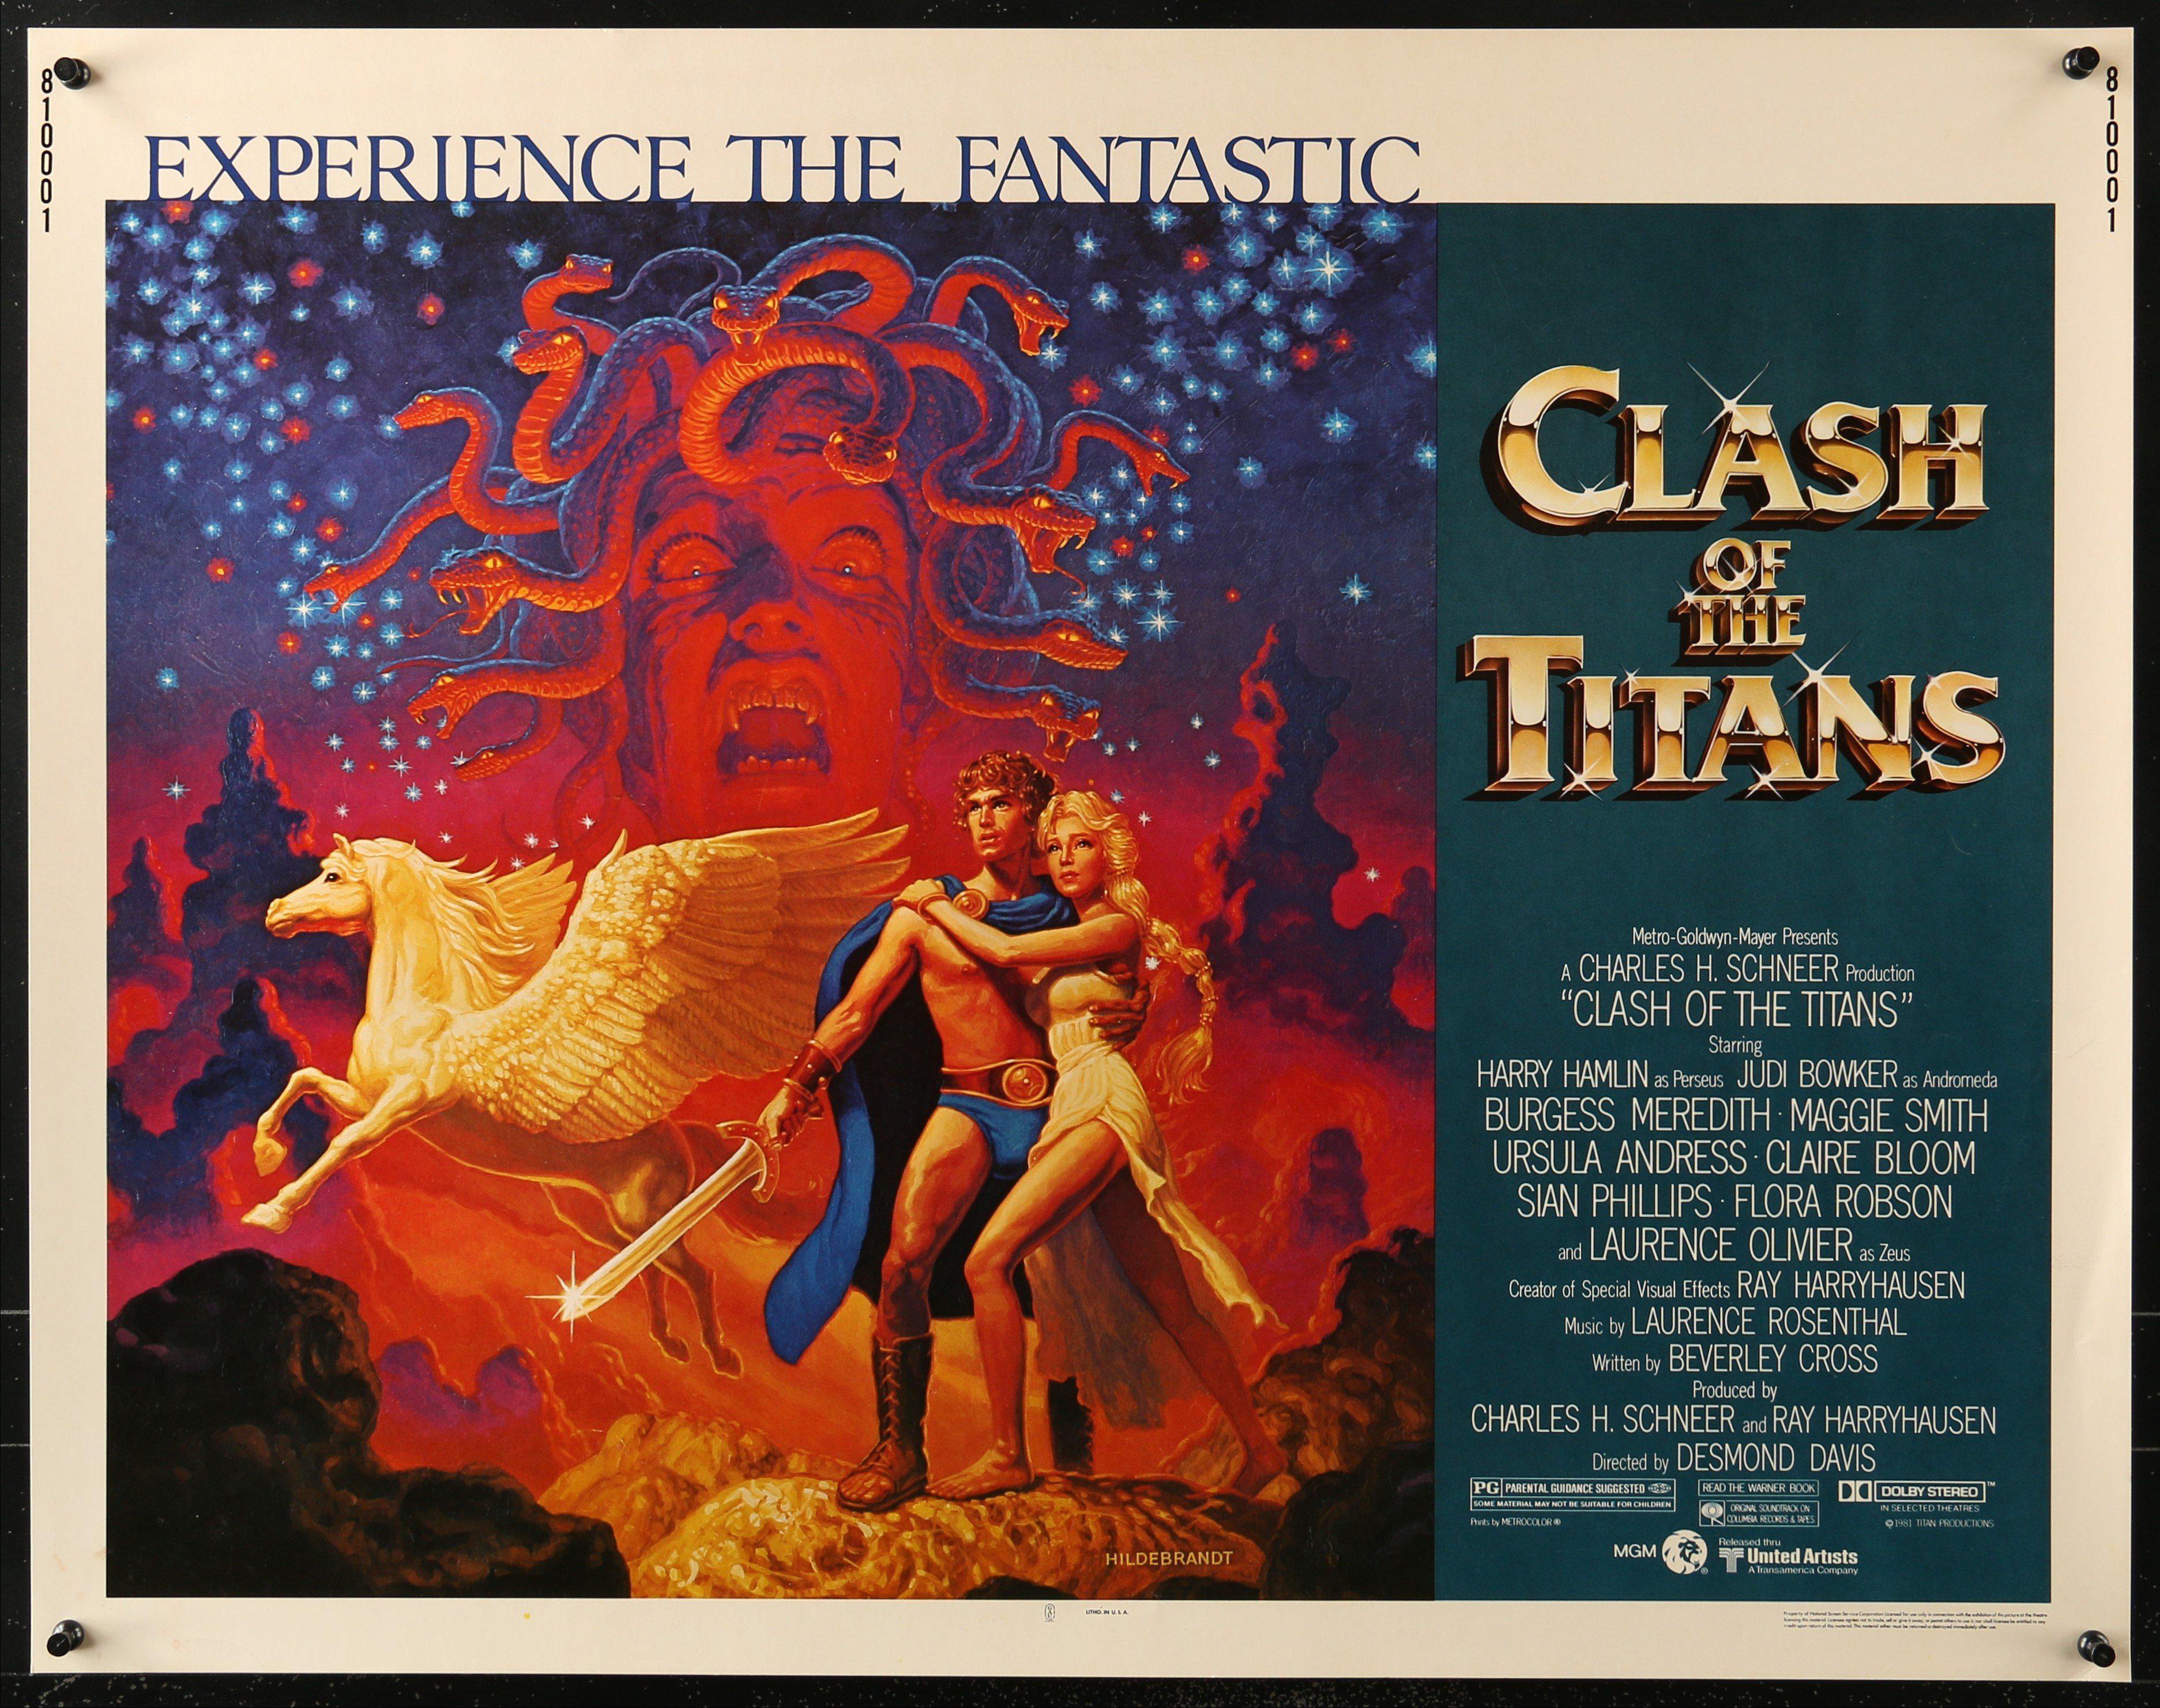 Clash of Titans Movie Poster by mademoiselle-art on DeviantArt